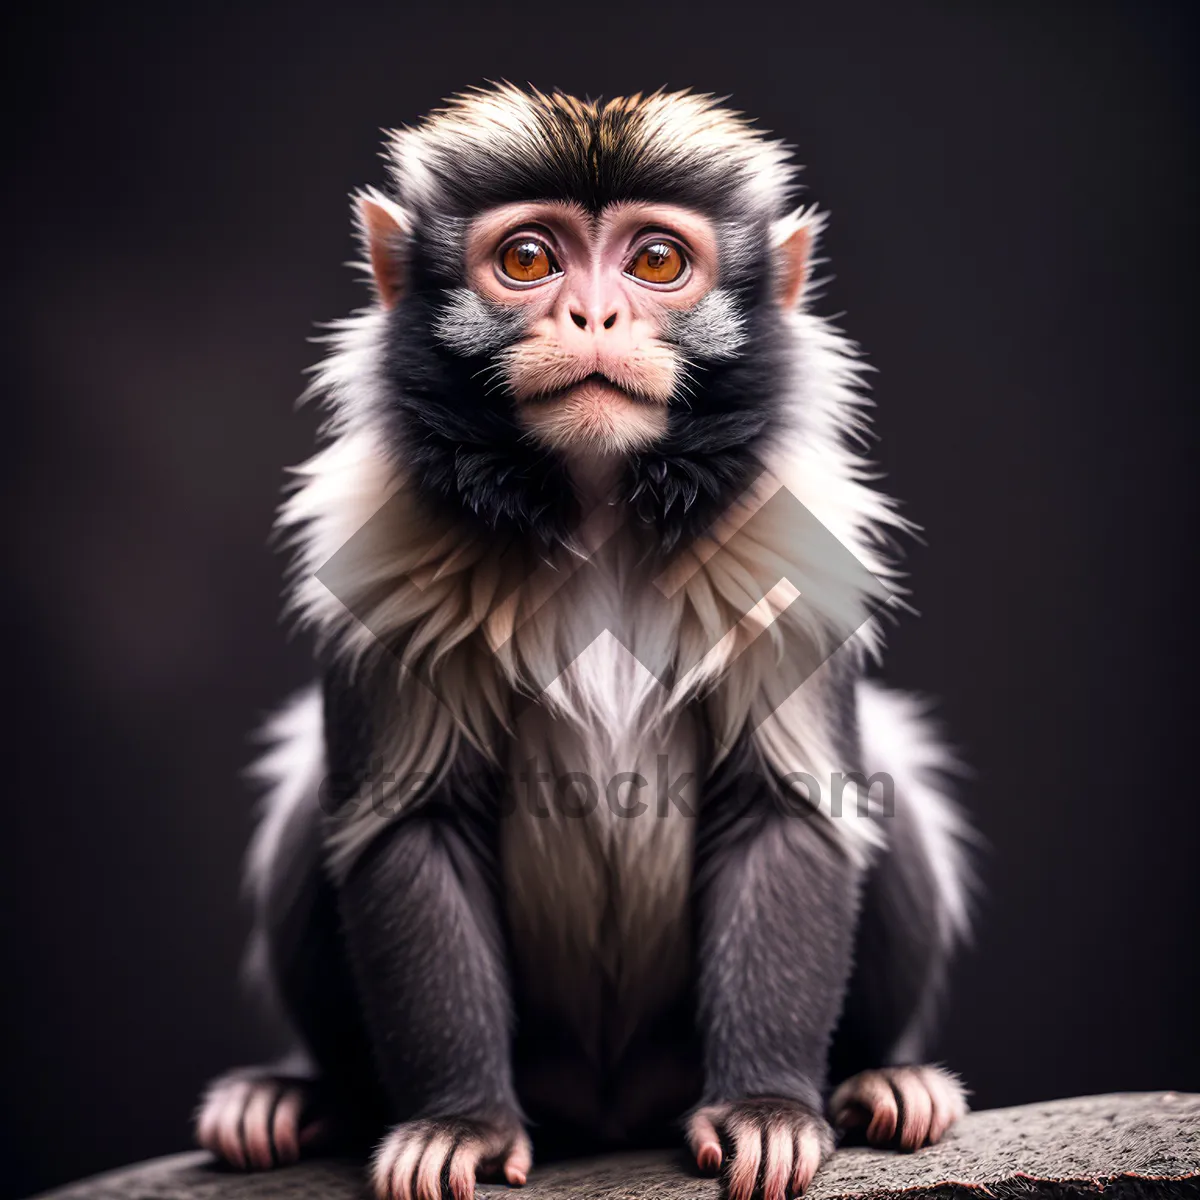 Picture of Mystic Macaque Portrait - Cute Primate in Wildlife